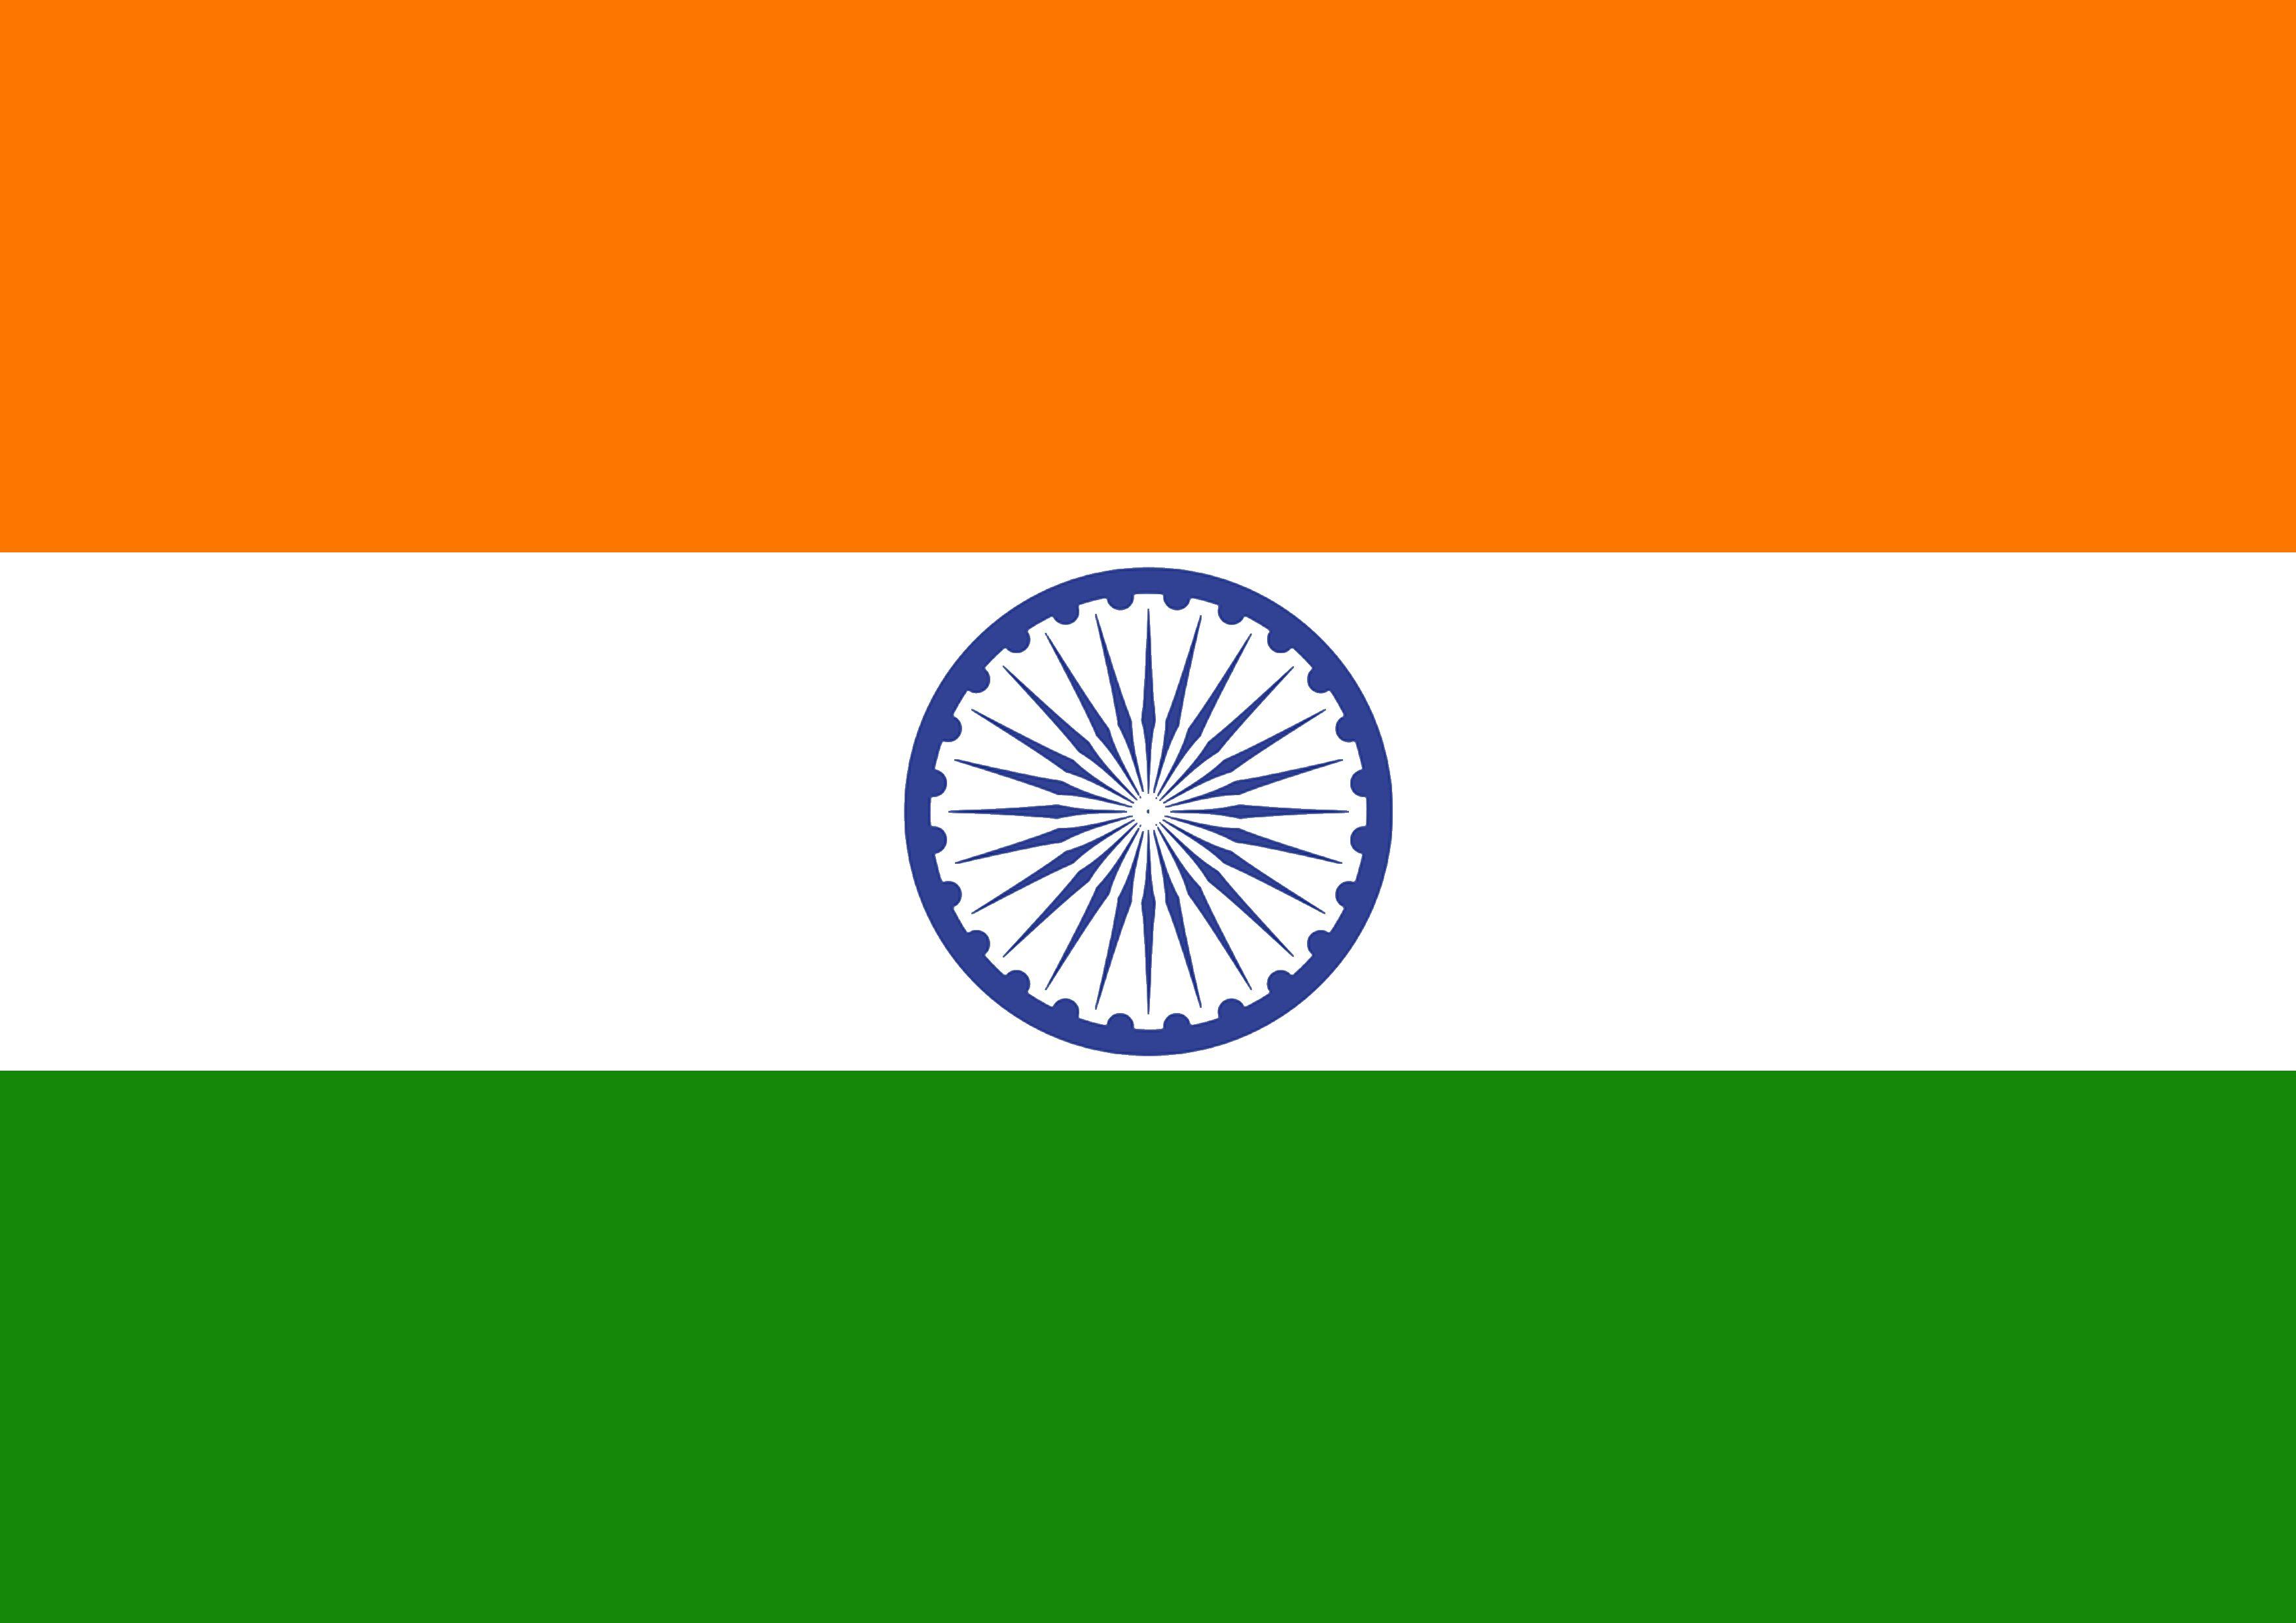 Bigraph Orange White Square Logo - National Flag of India Images, History of Indian Flag